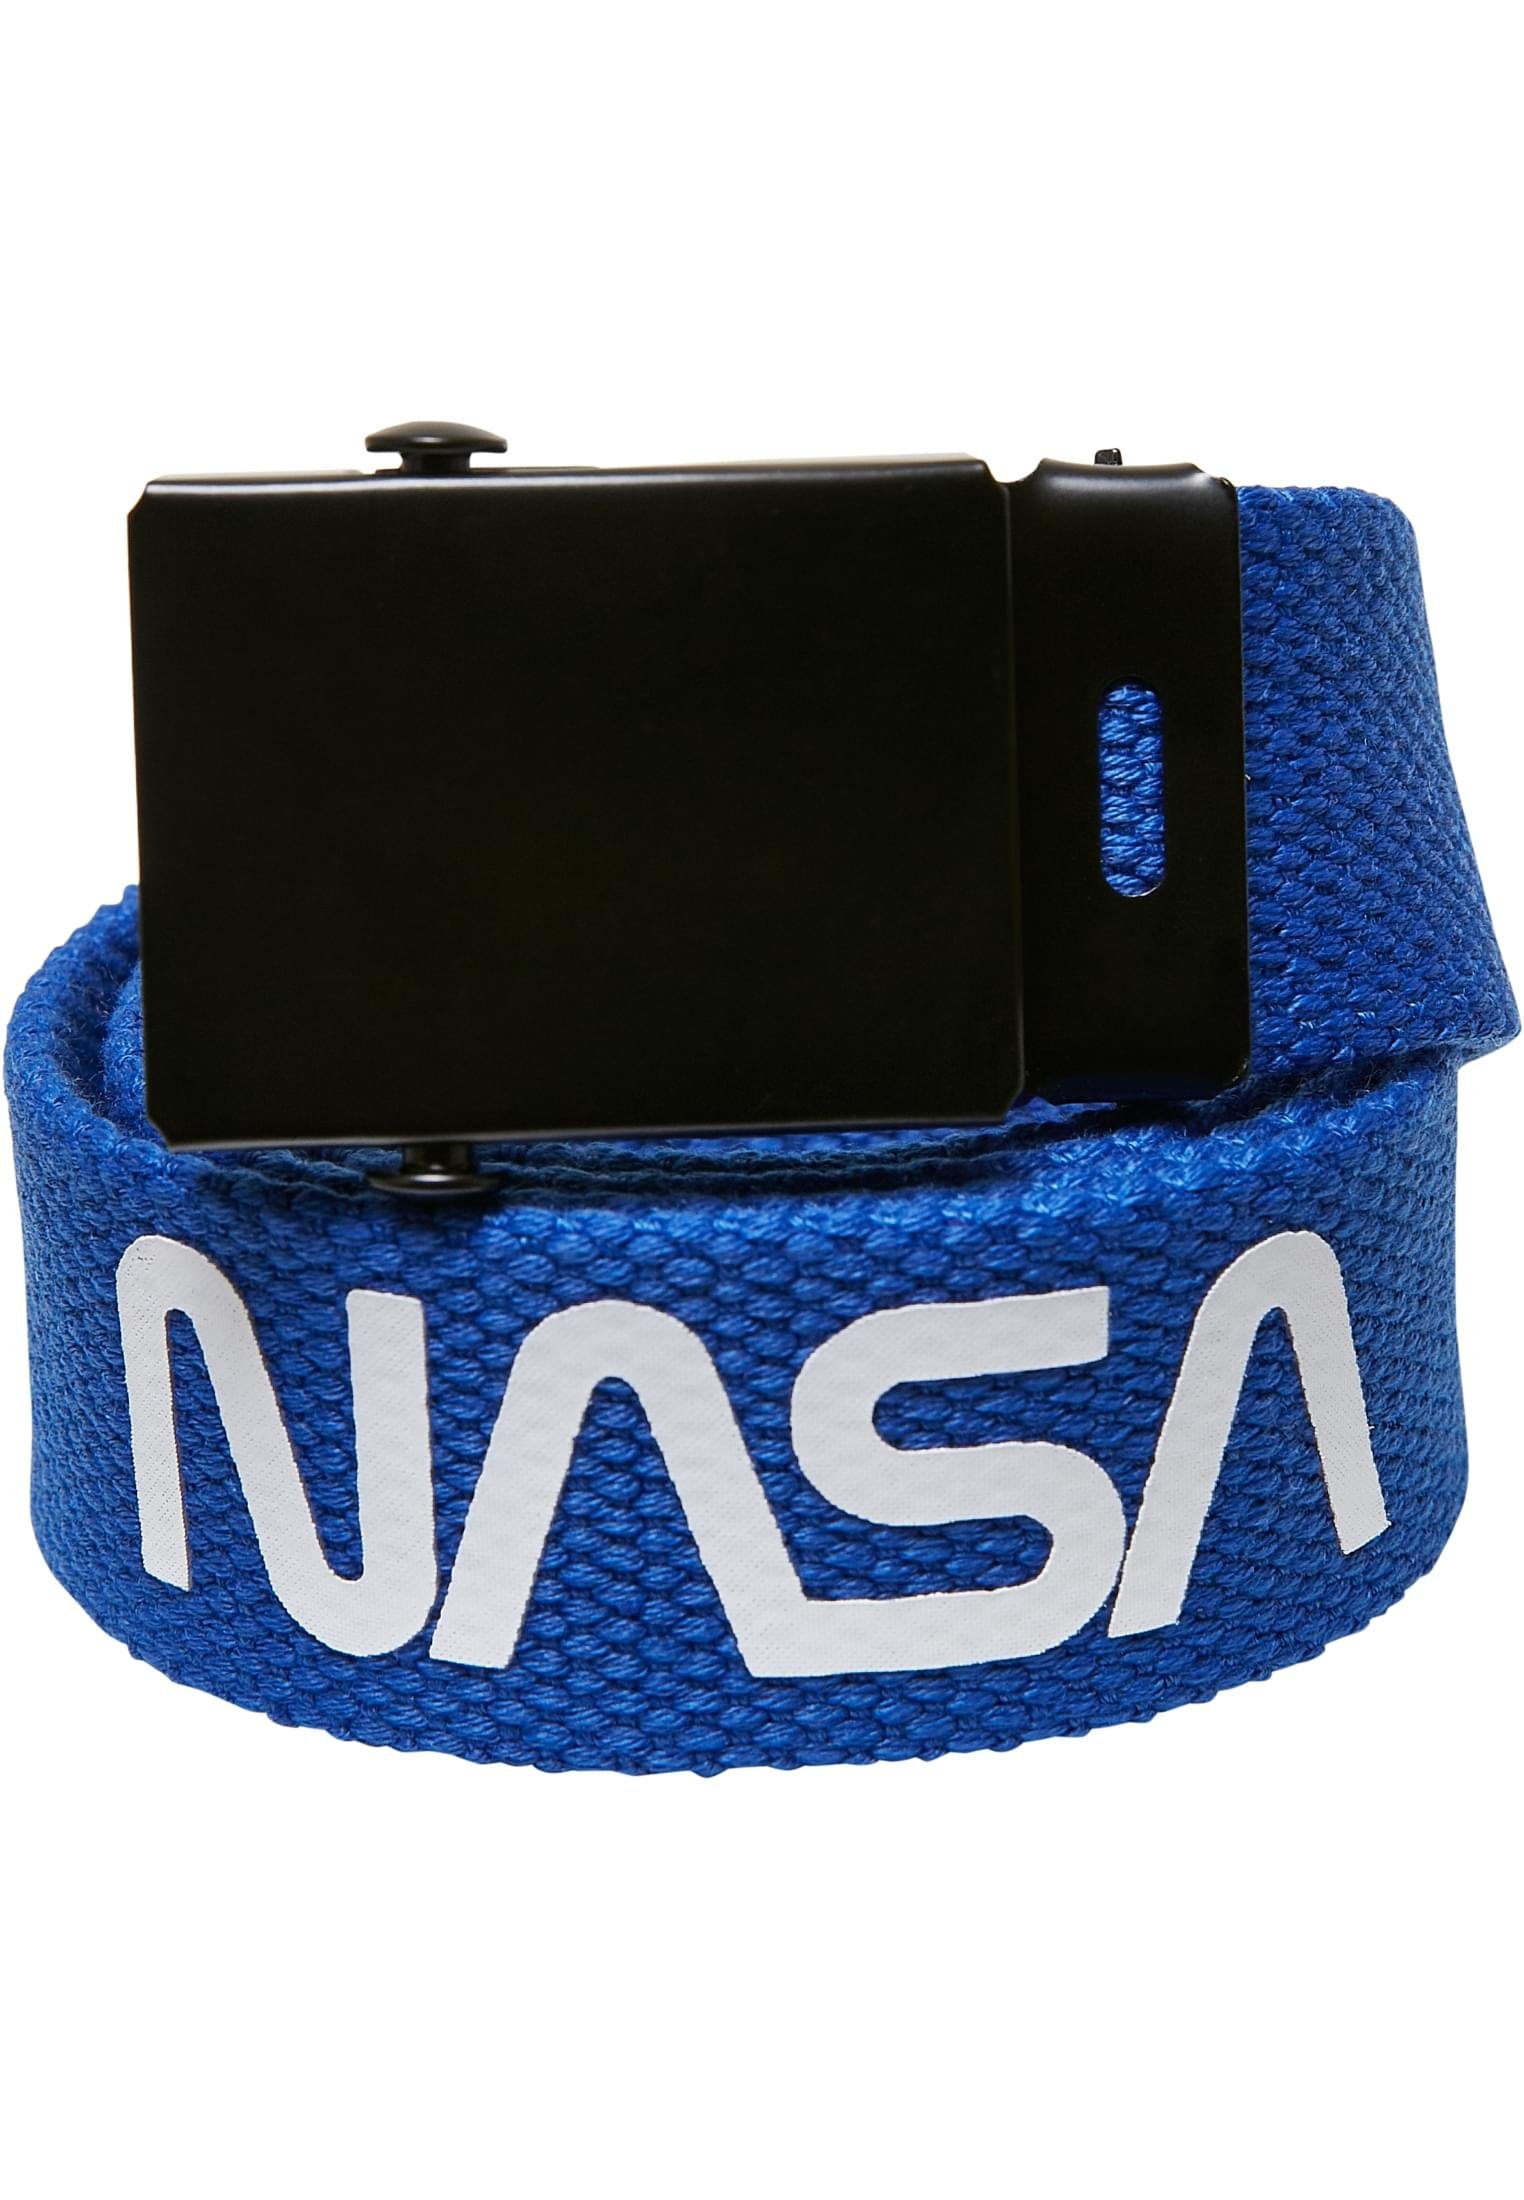 Hüftgürtel white/blue 2-Pack Belt MisterTee NASA Kids Accessoires